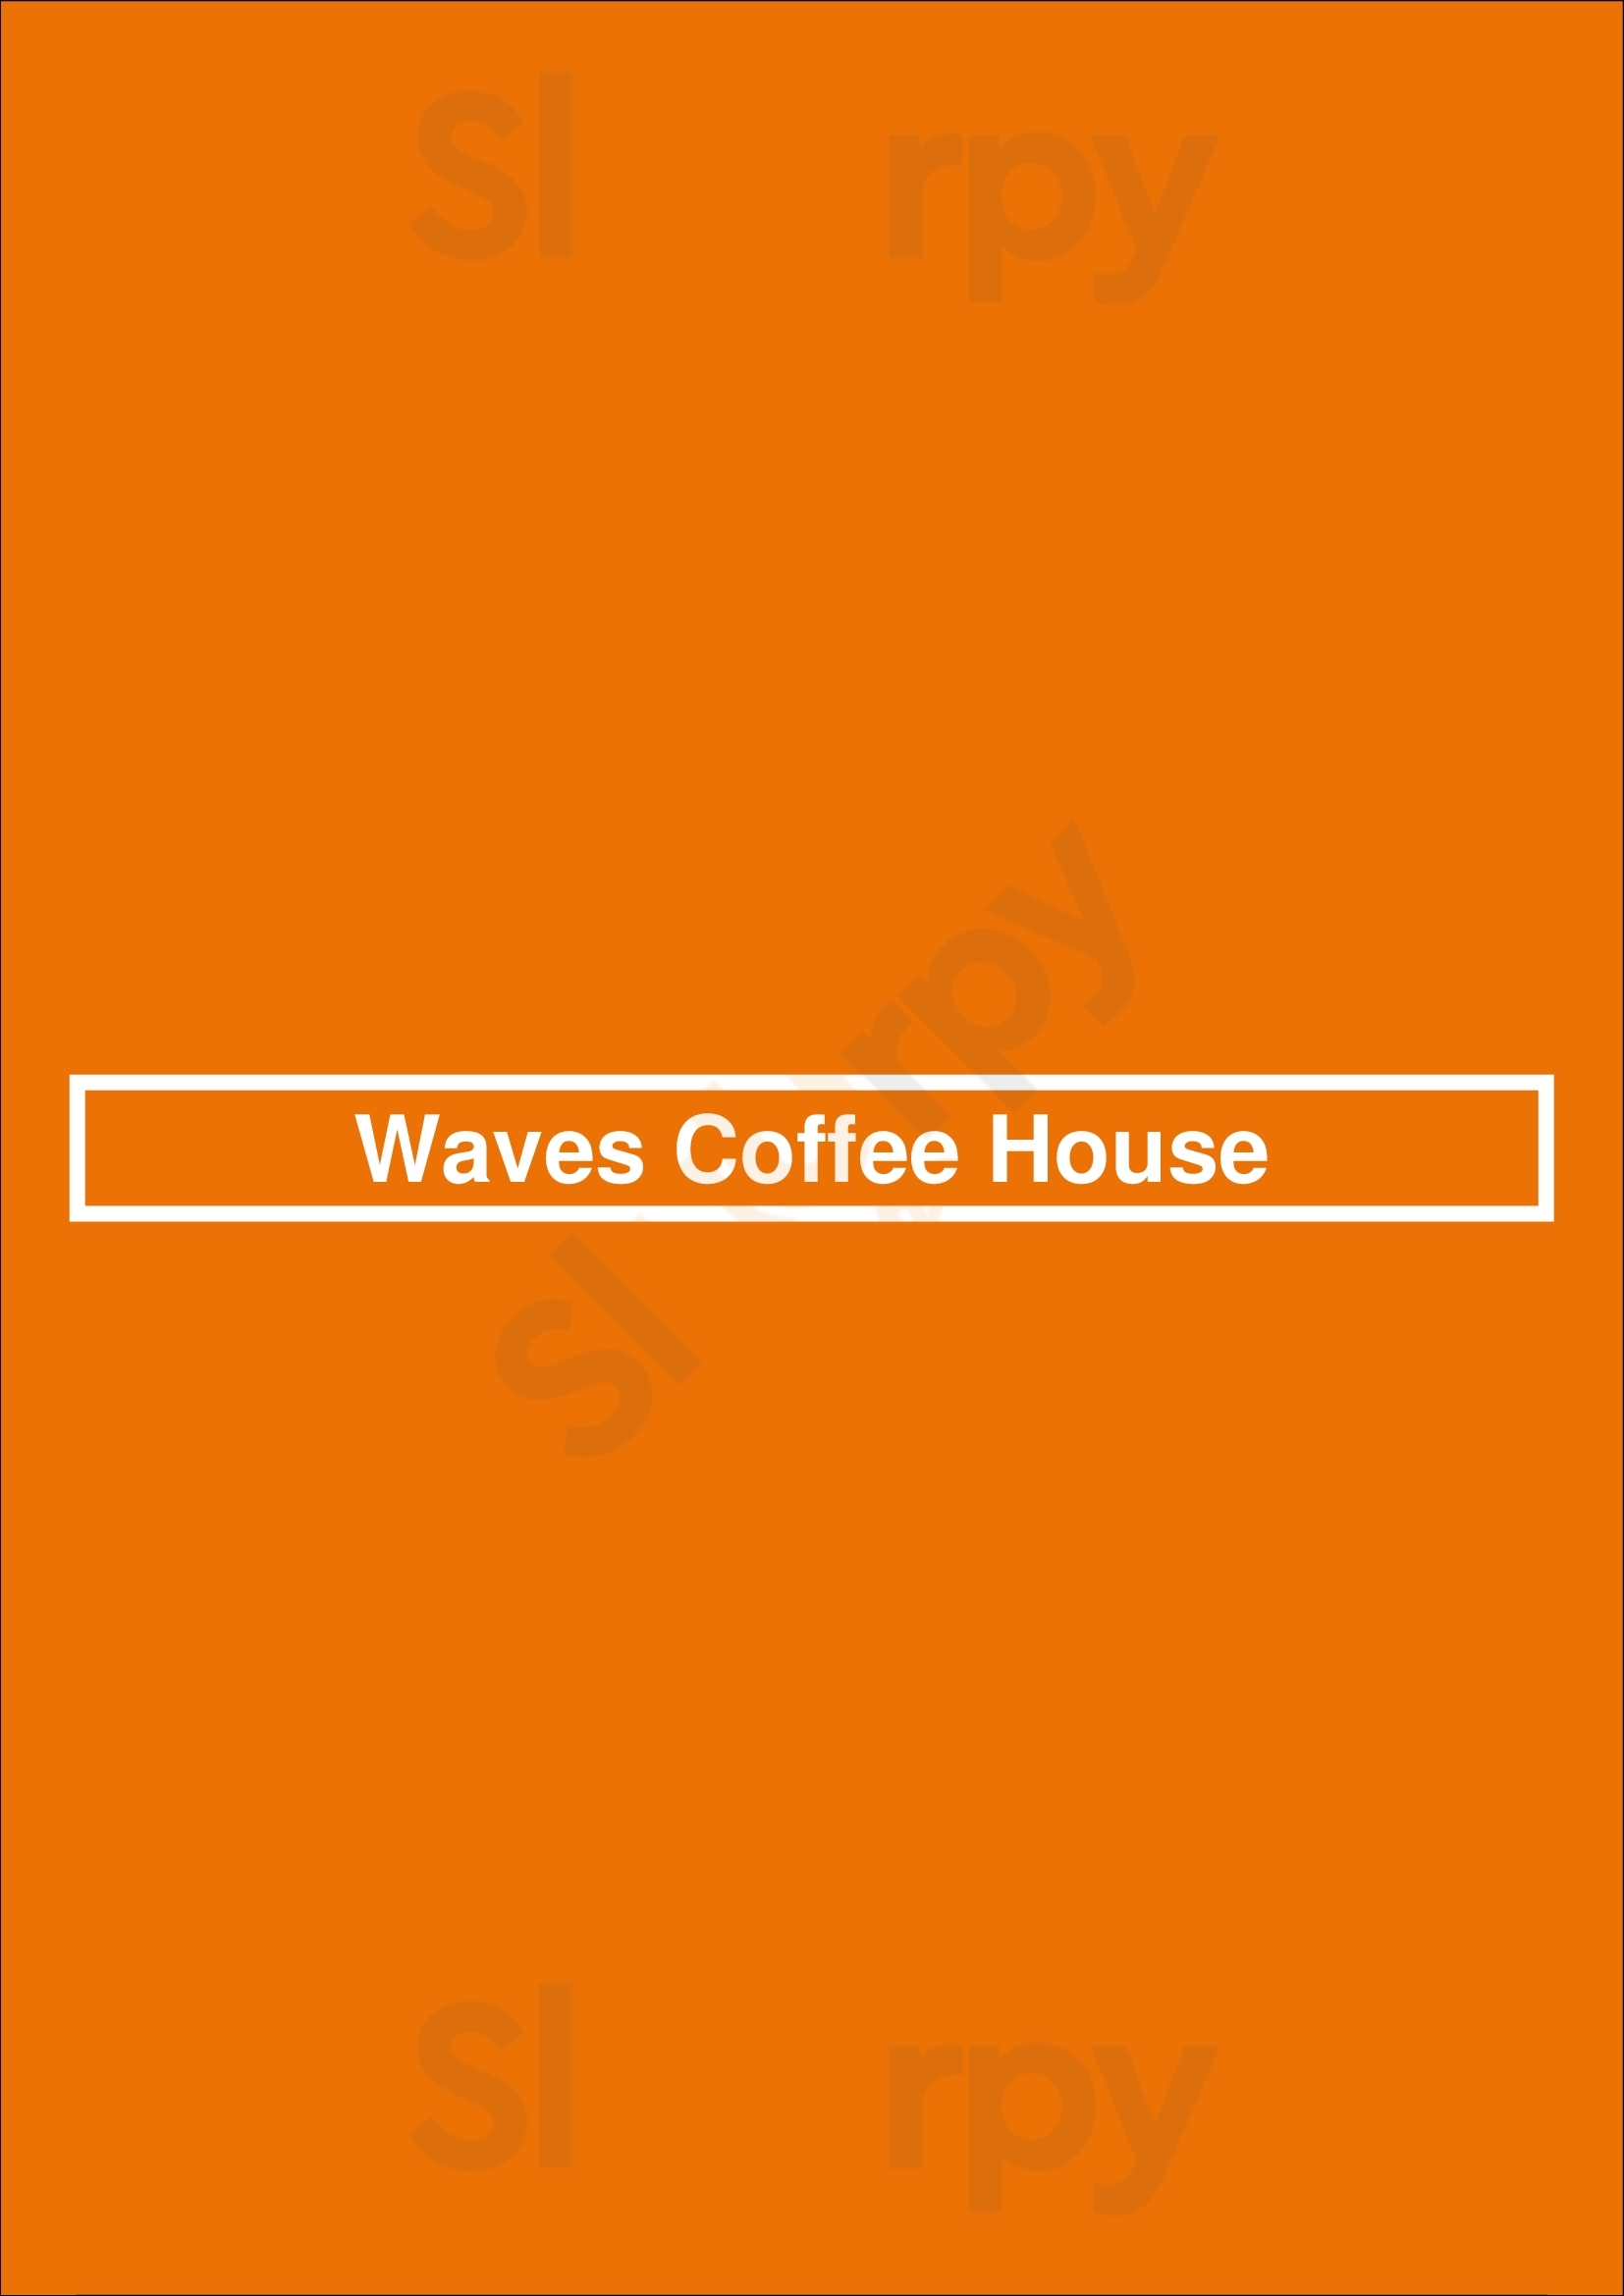 Waves Coffee House Burnaby Menu - 1